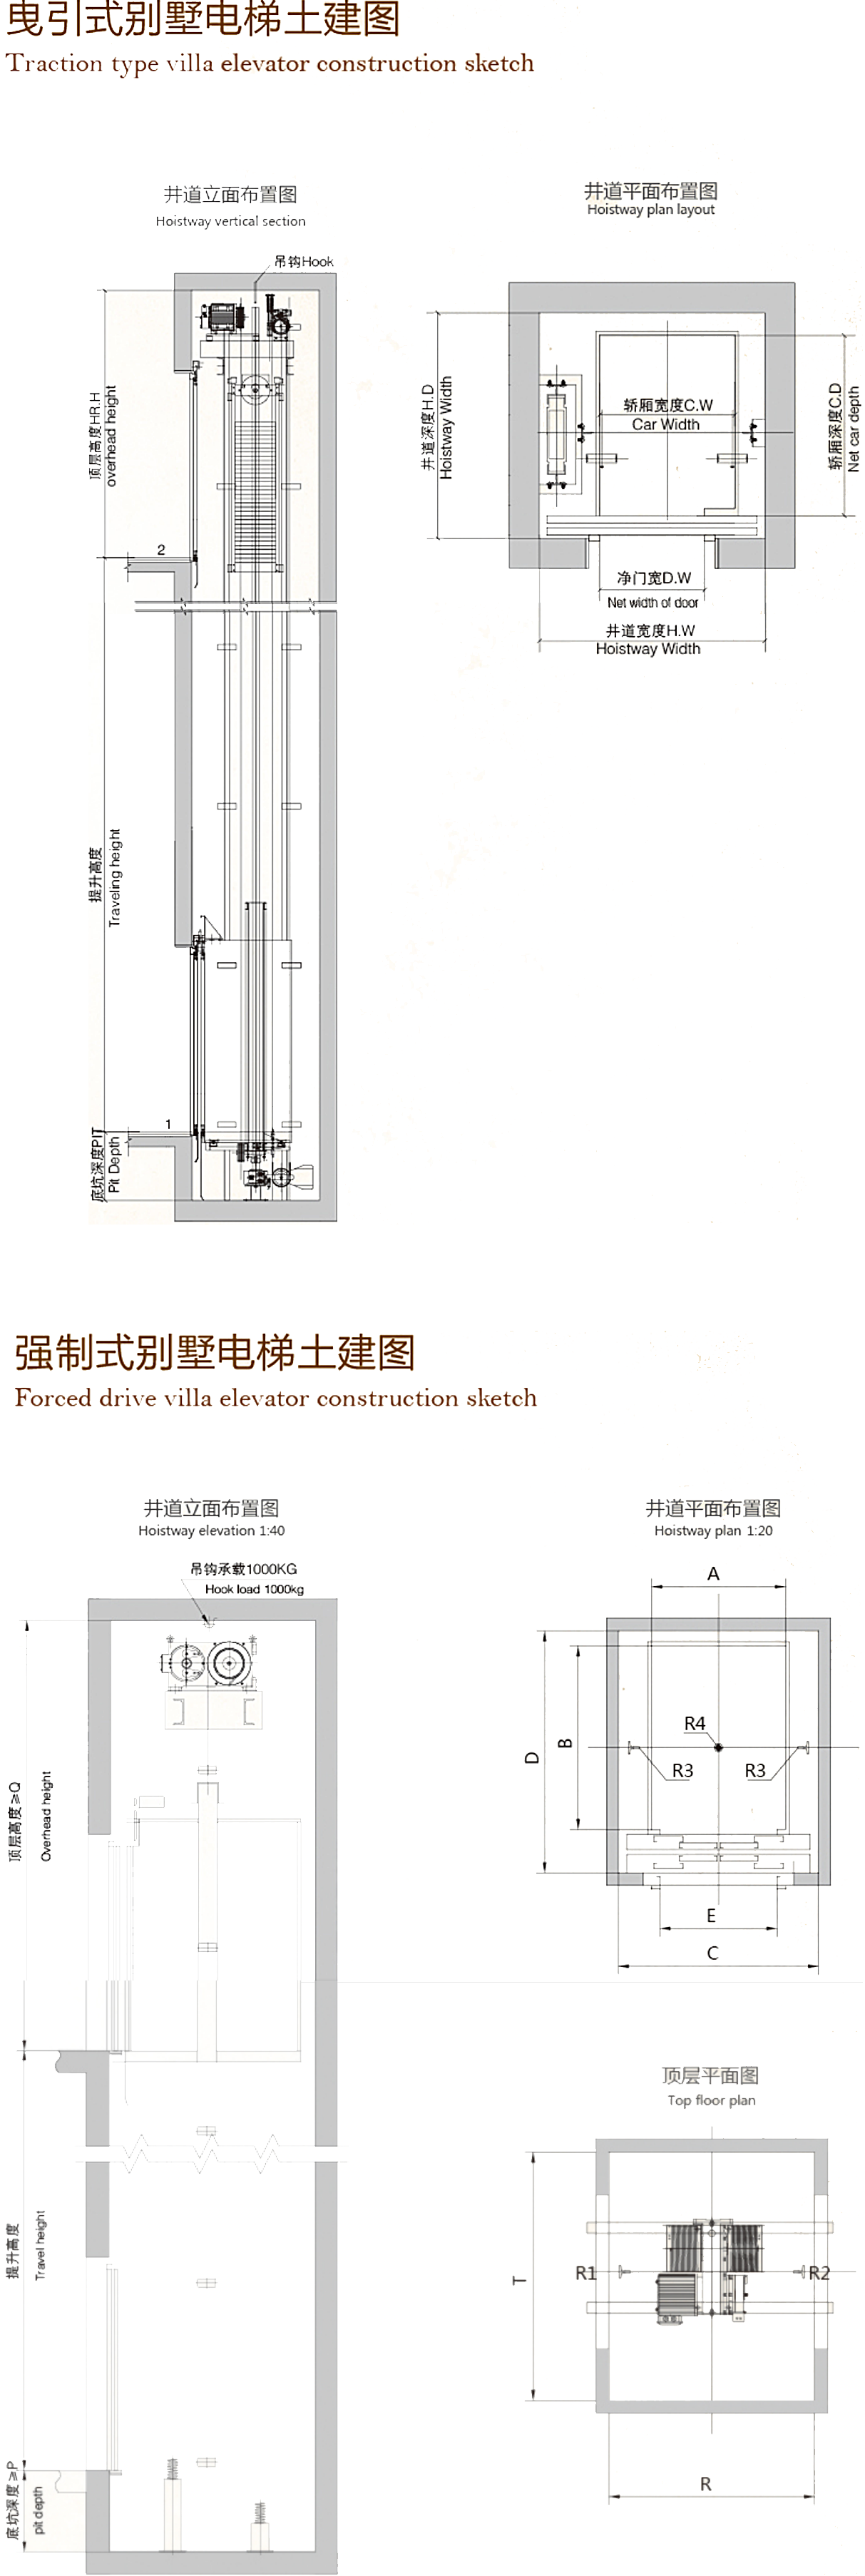 passenger elevator manufacturers